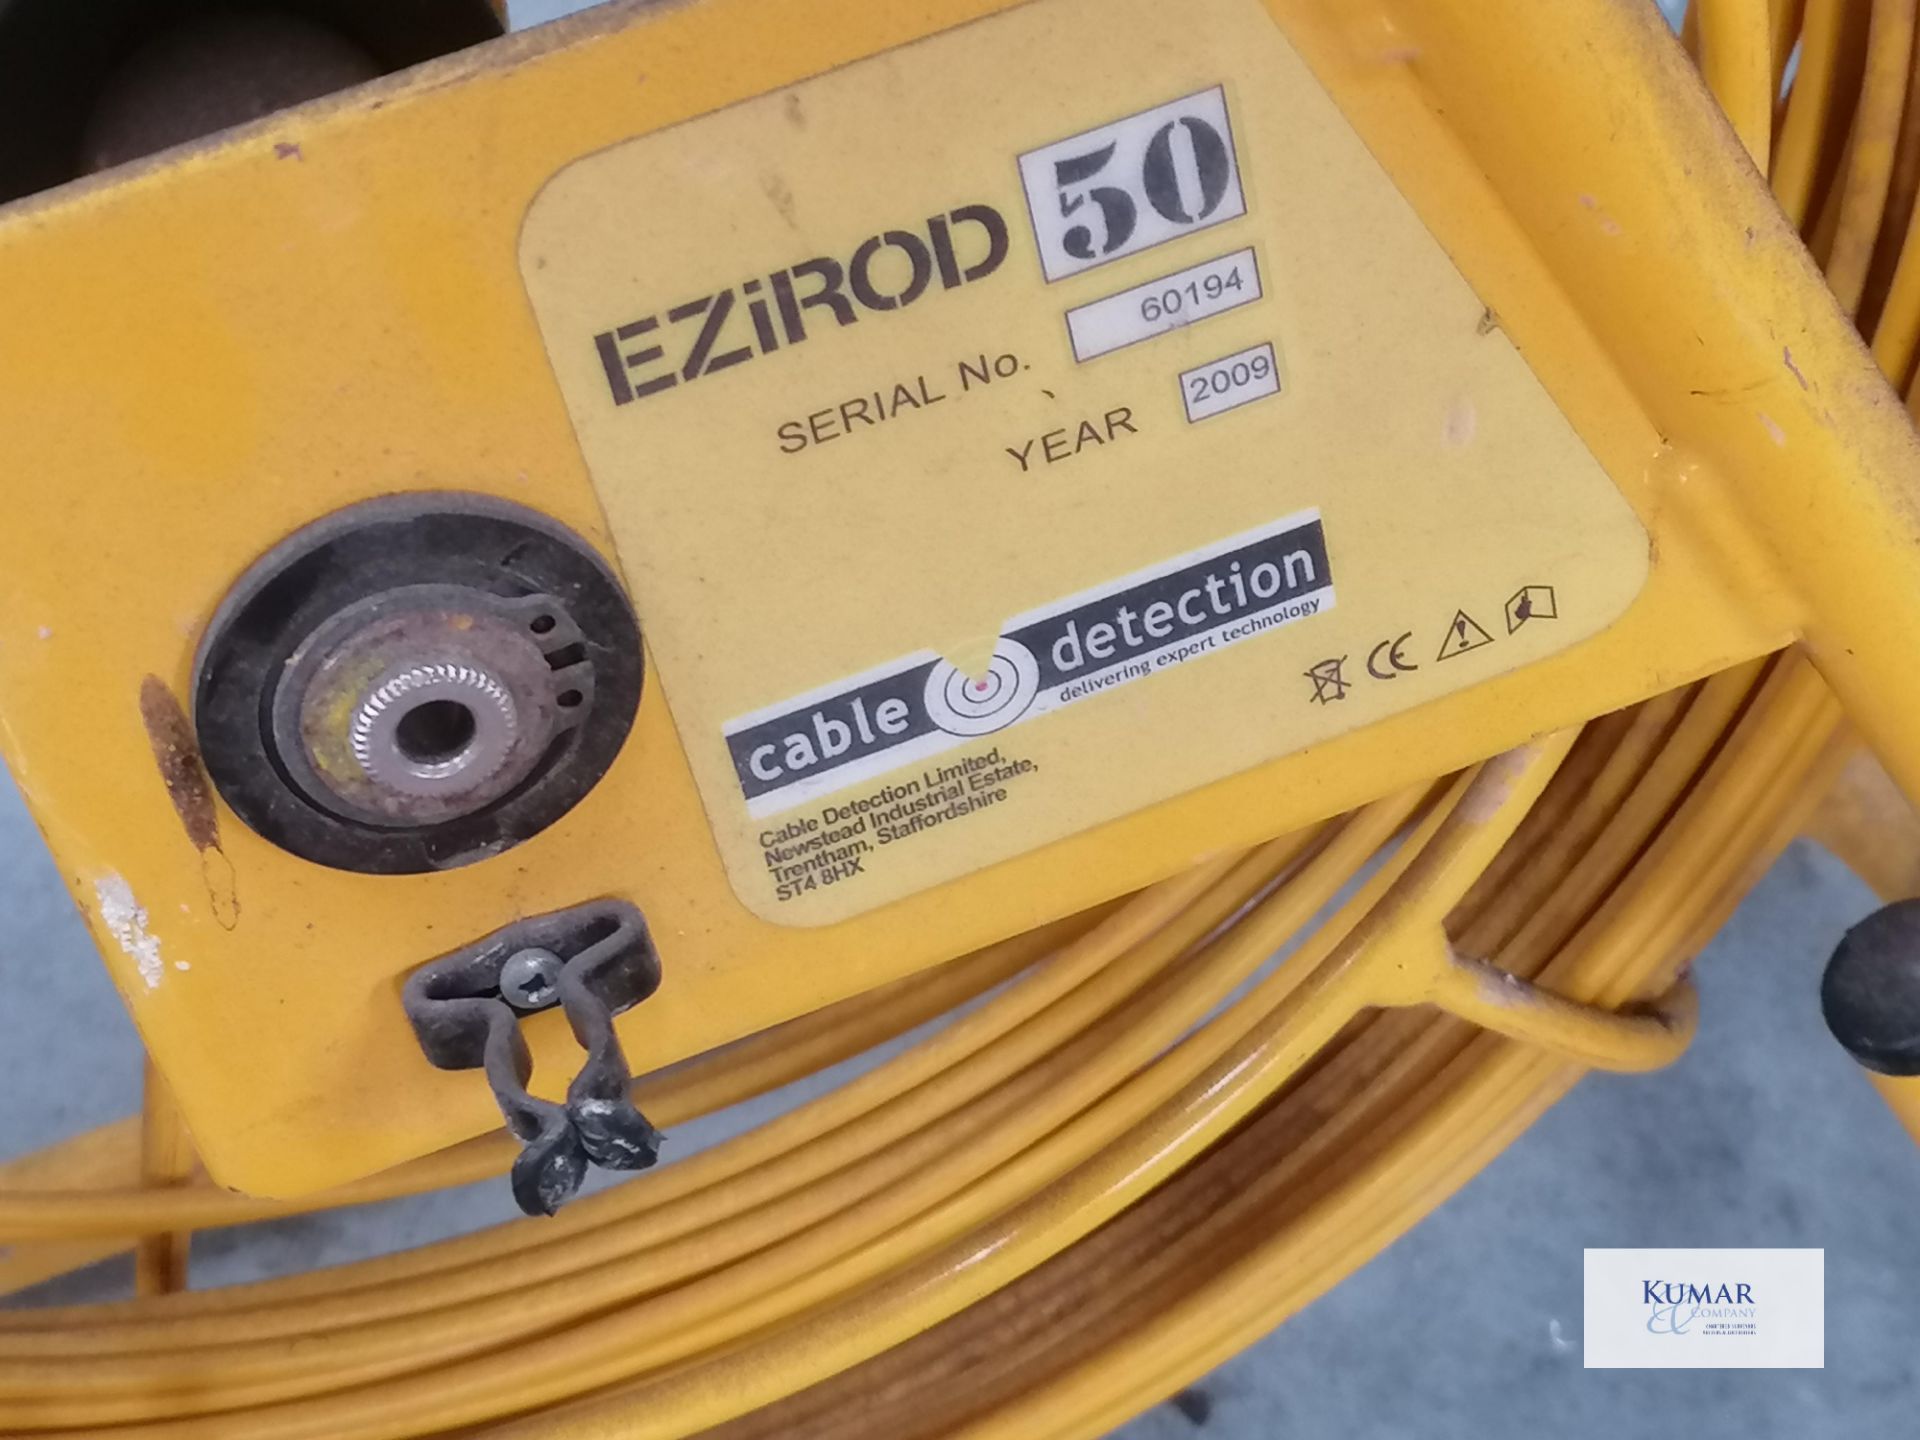 2 x EZiROD 50 Flexible Tracing Rod Serial No 60193/94 - Image 4 of 4